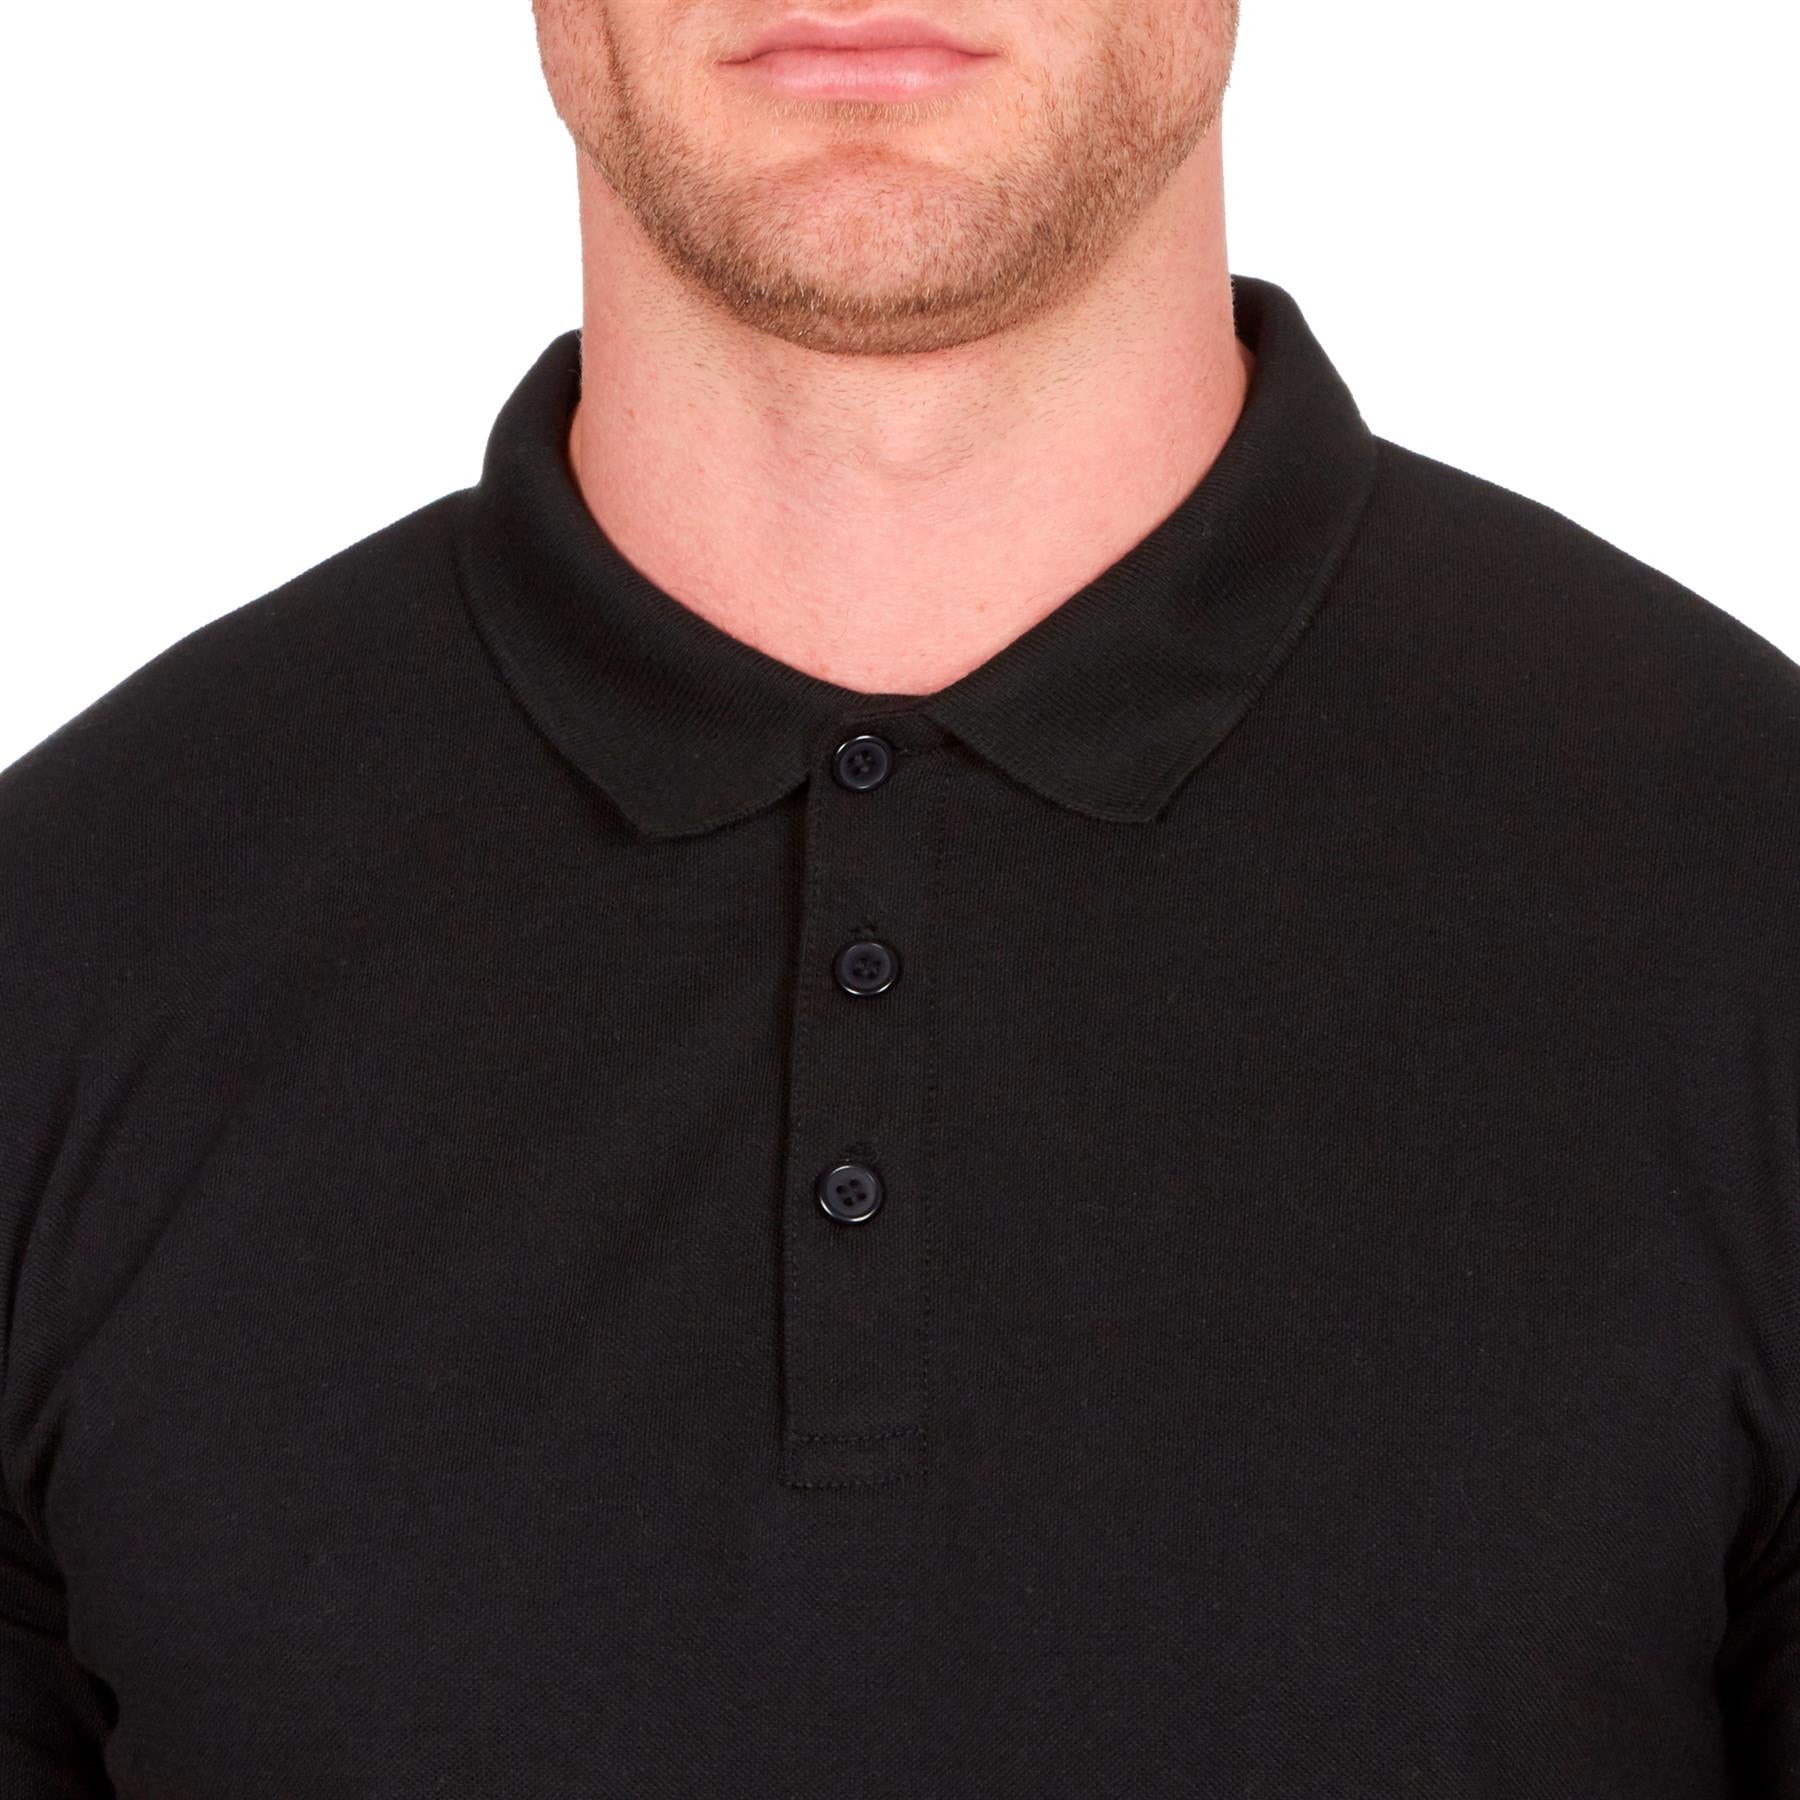 Dark Navy Short Sleeve Polo T-Shirt